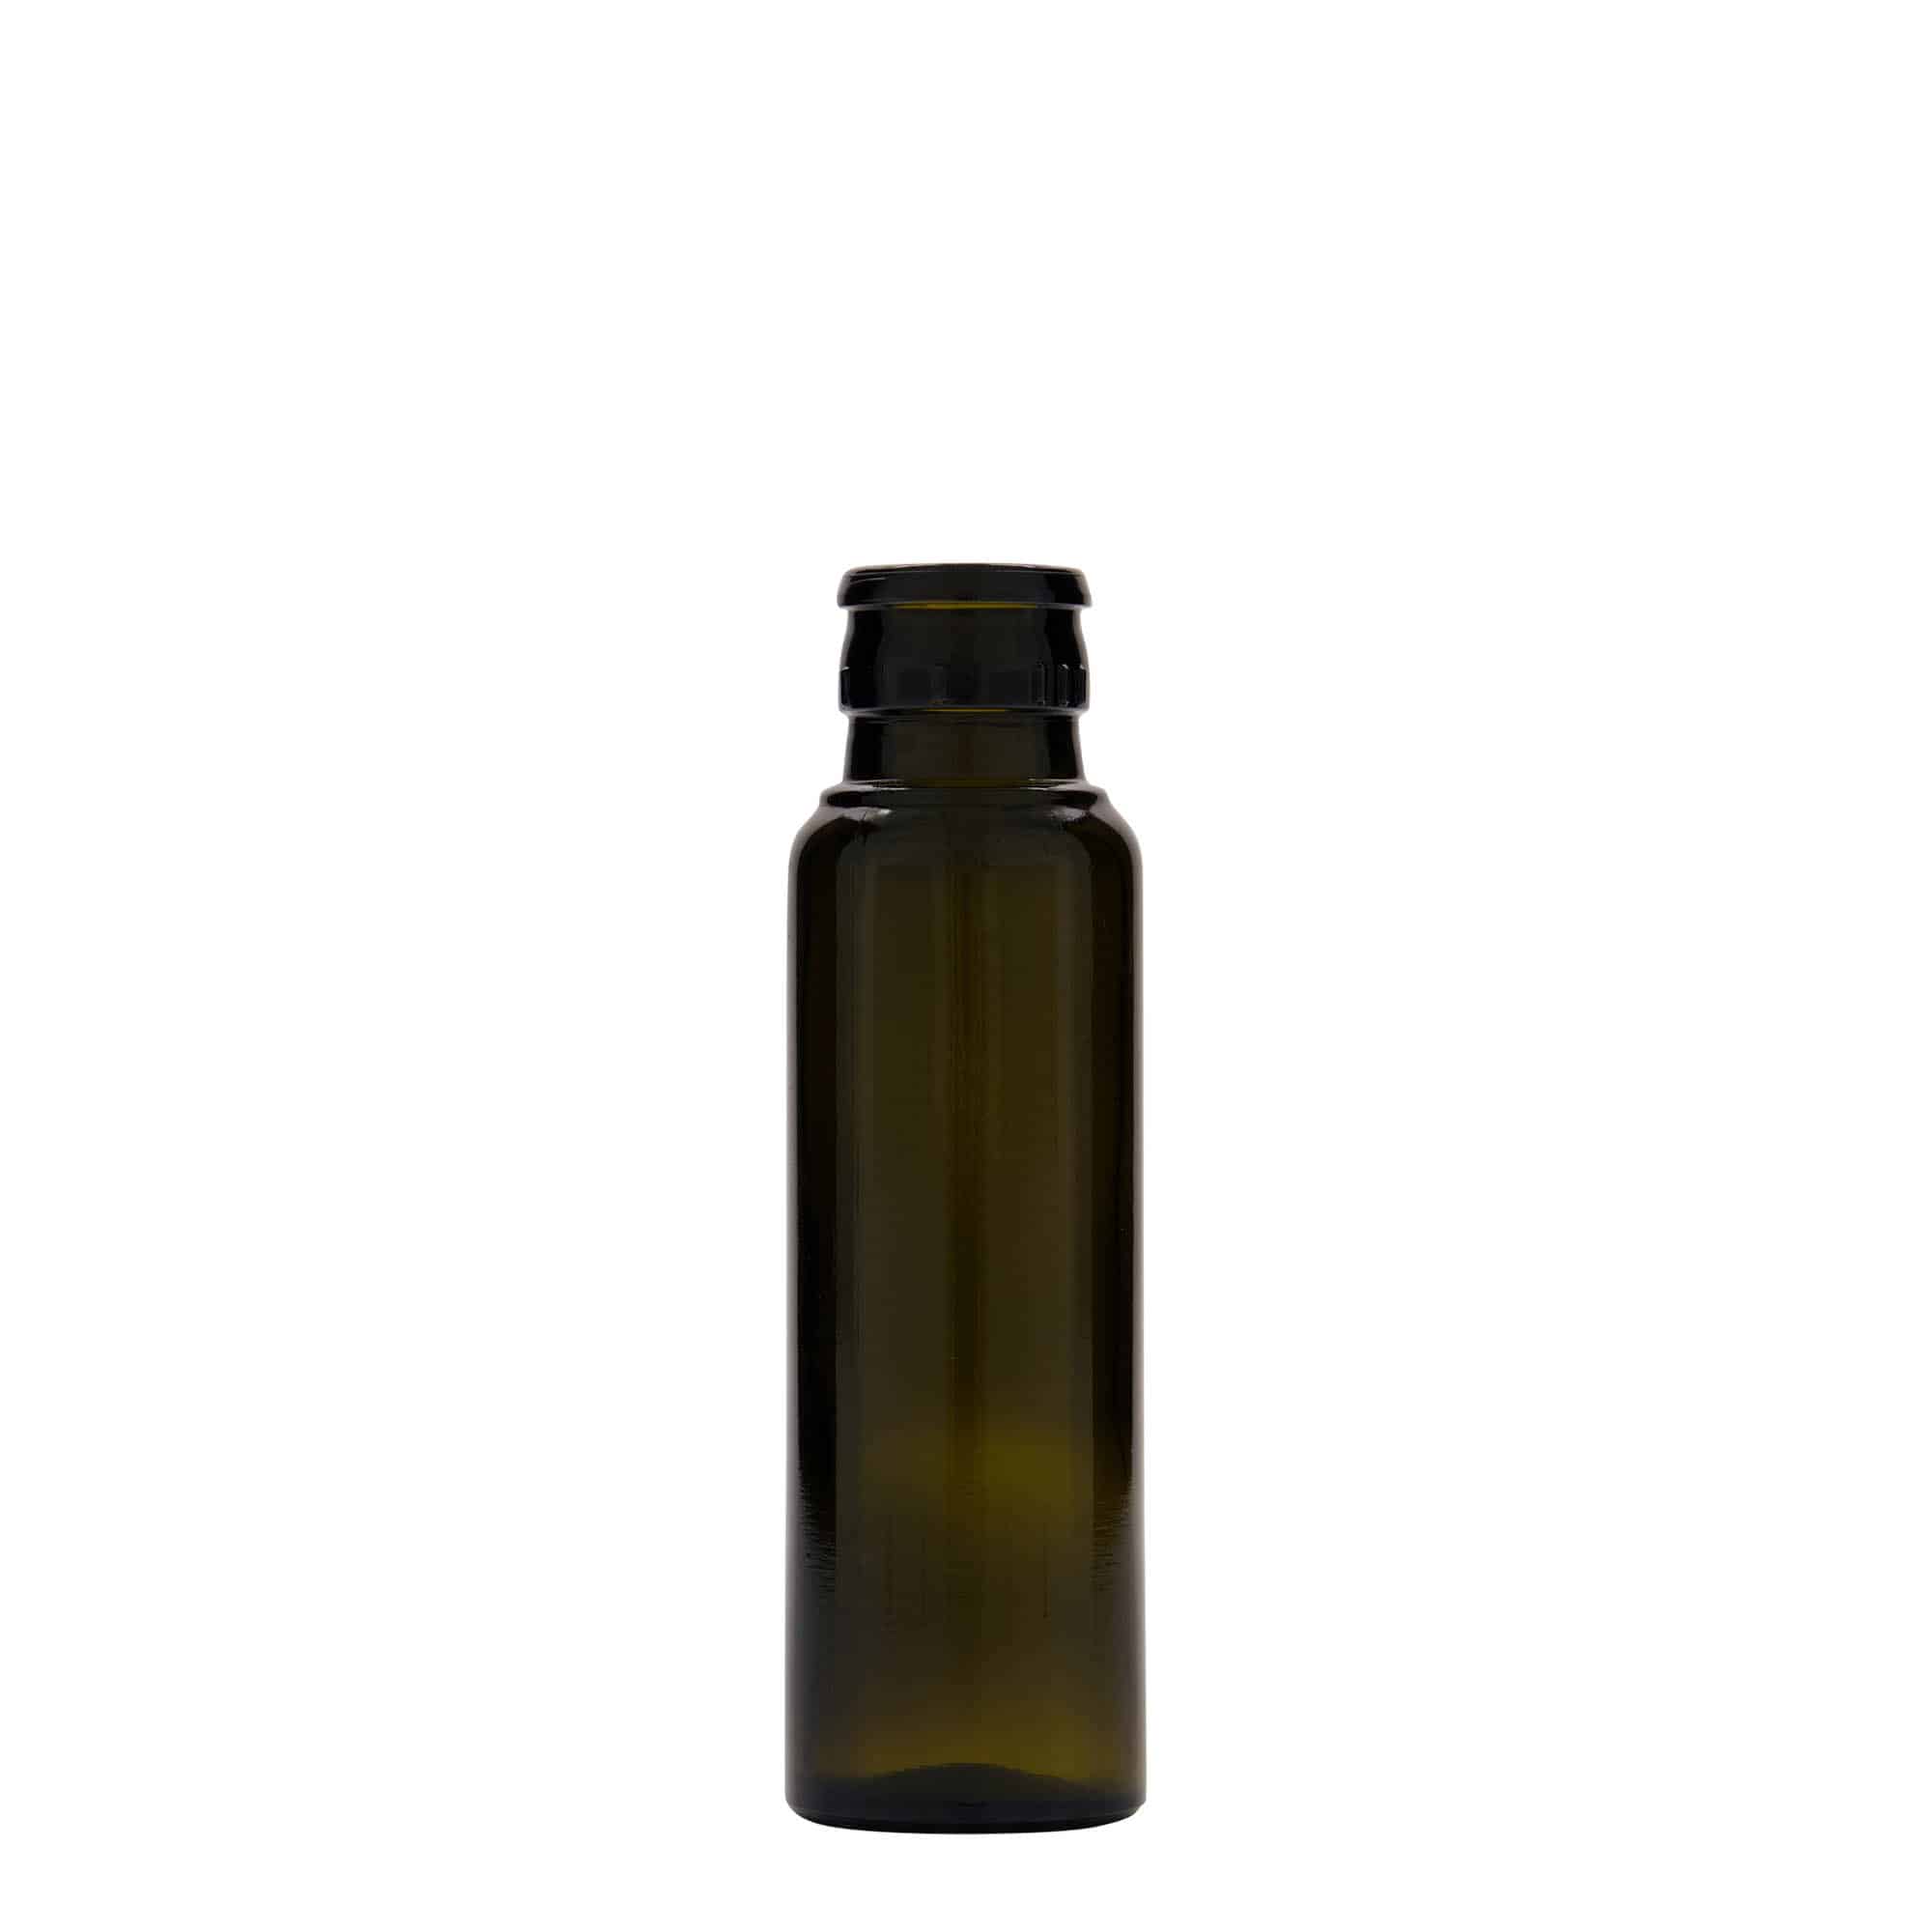 100 ml oil/vinegar bottle 'Willy New', glass, antique green, closure: DOP